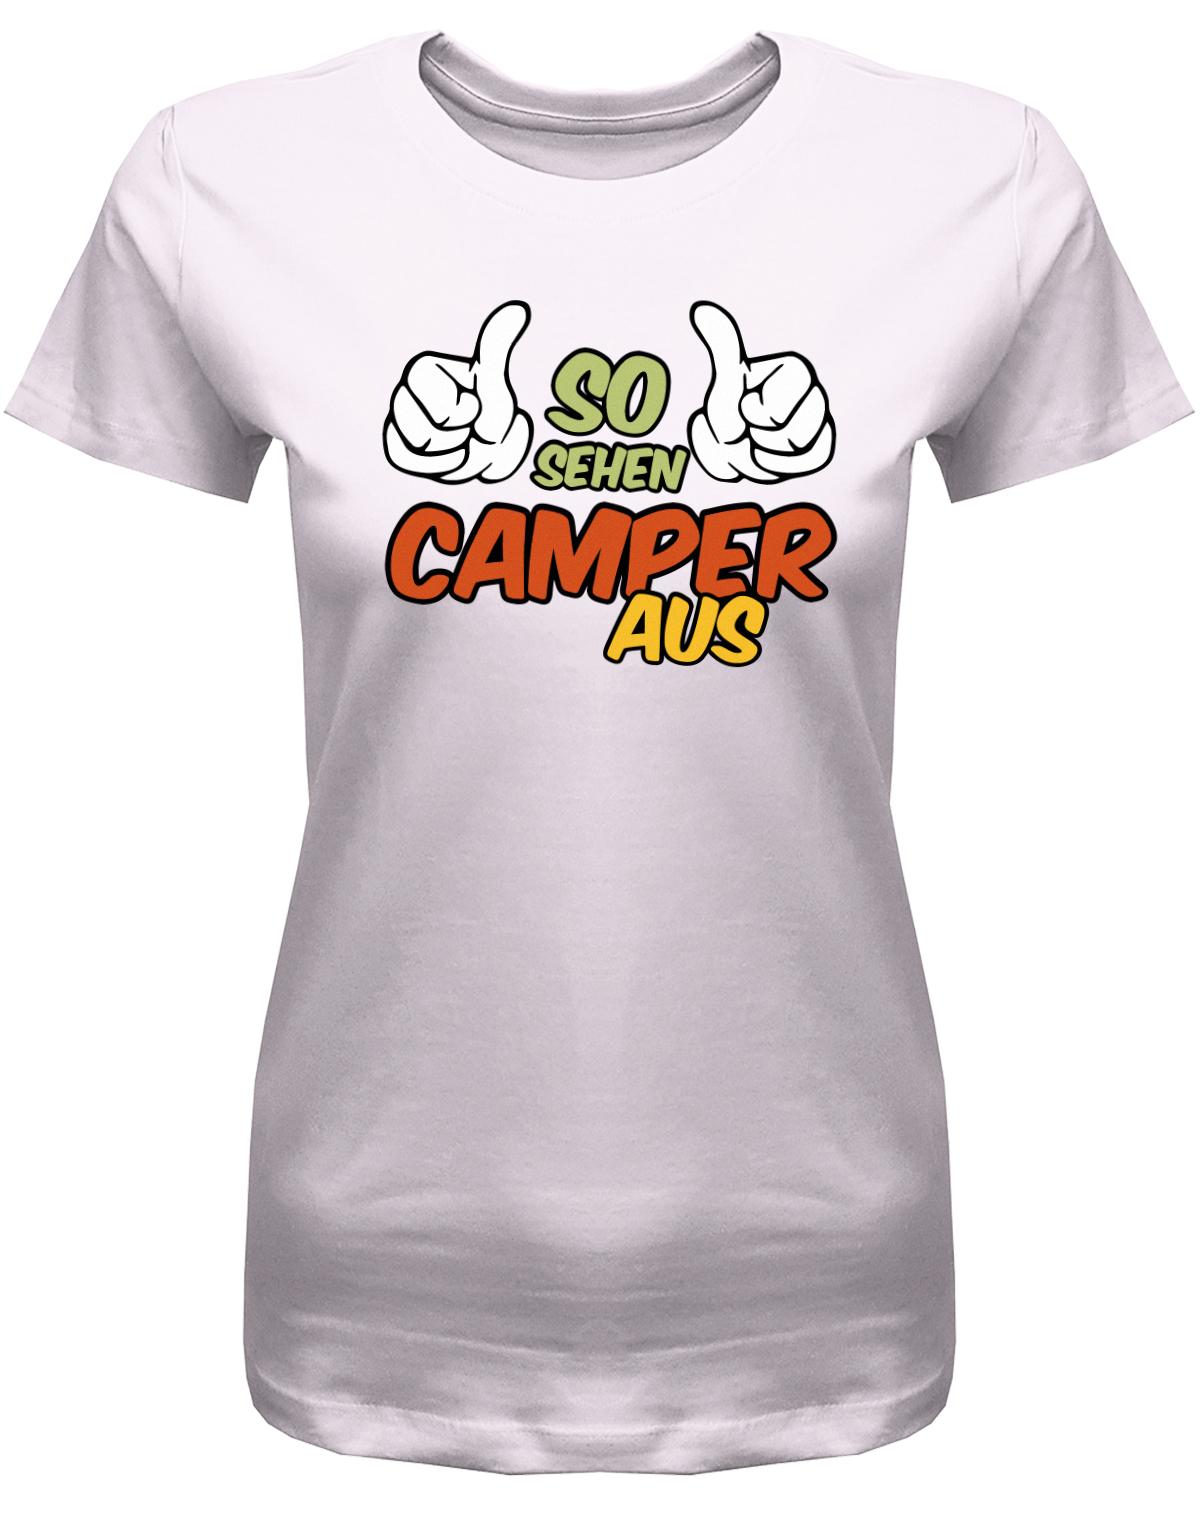 So-sehen-Camper-aus-Damen-Camping-Shirt-rosaIjE3mHW1BLwuz